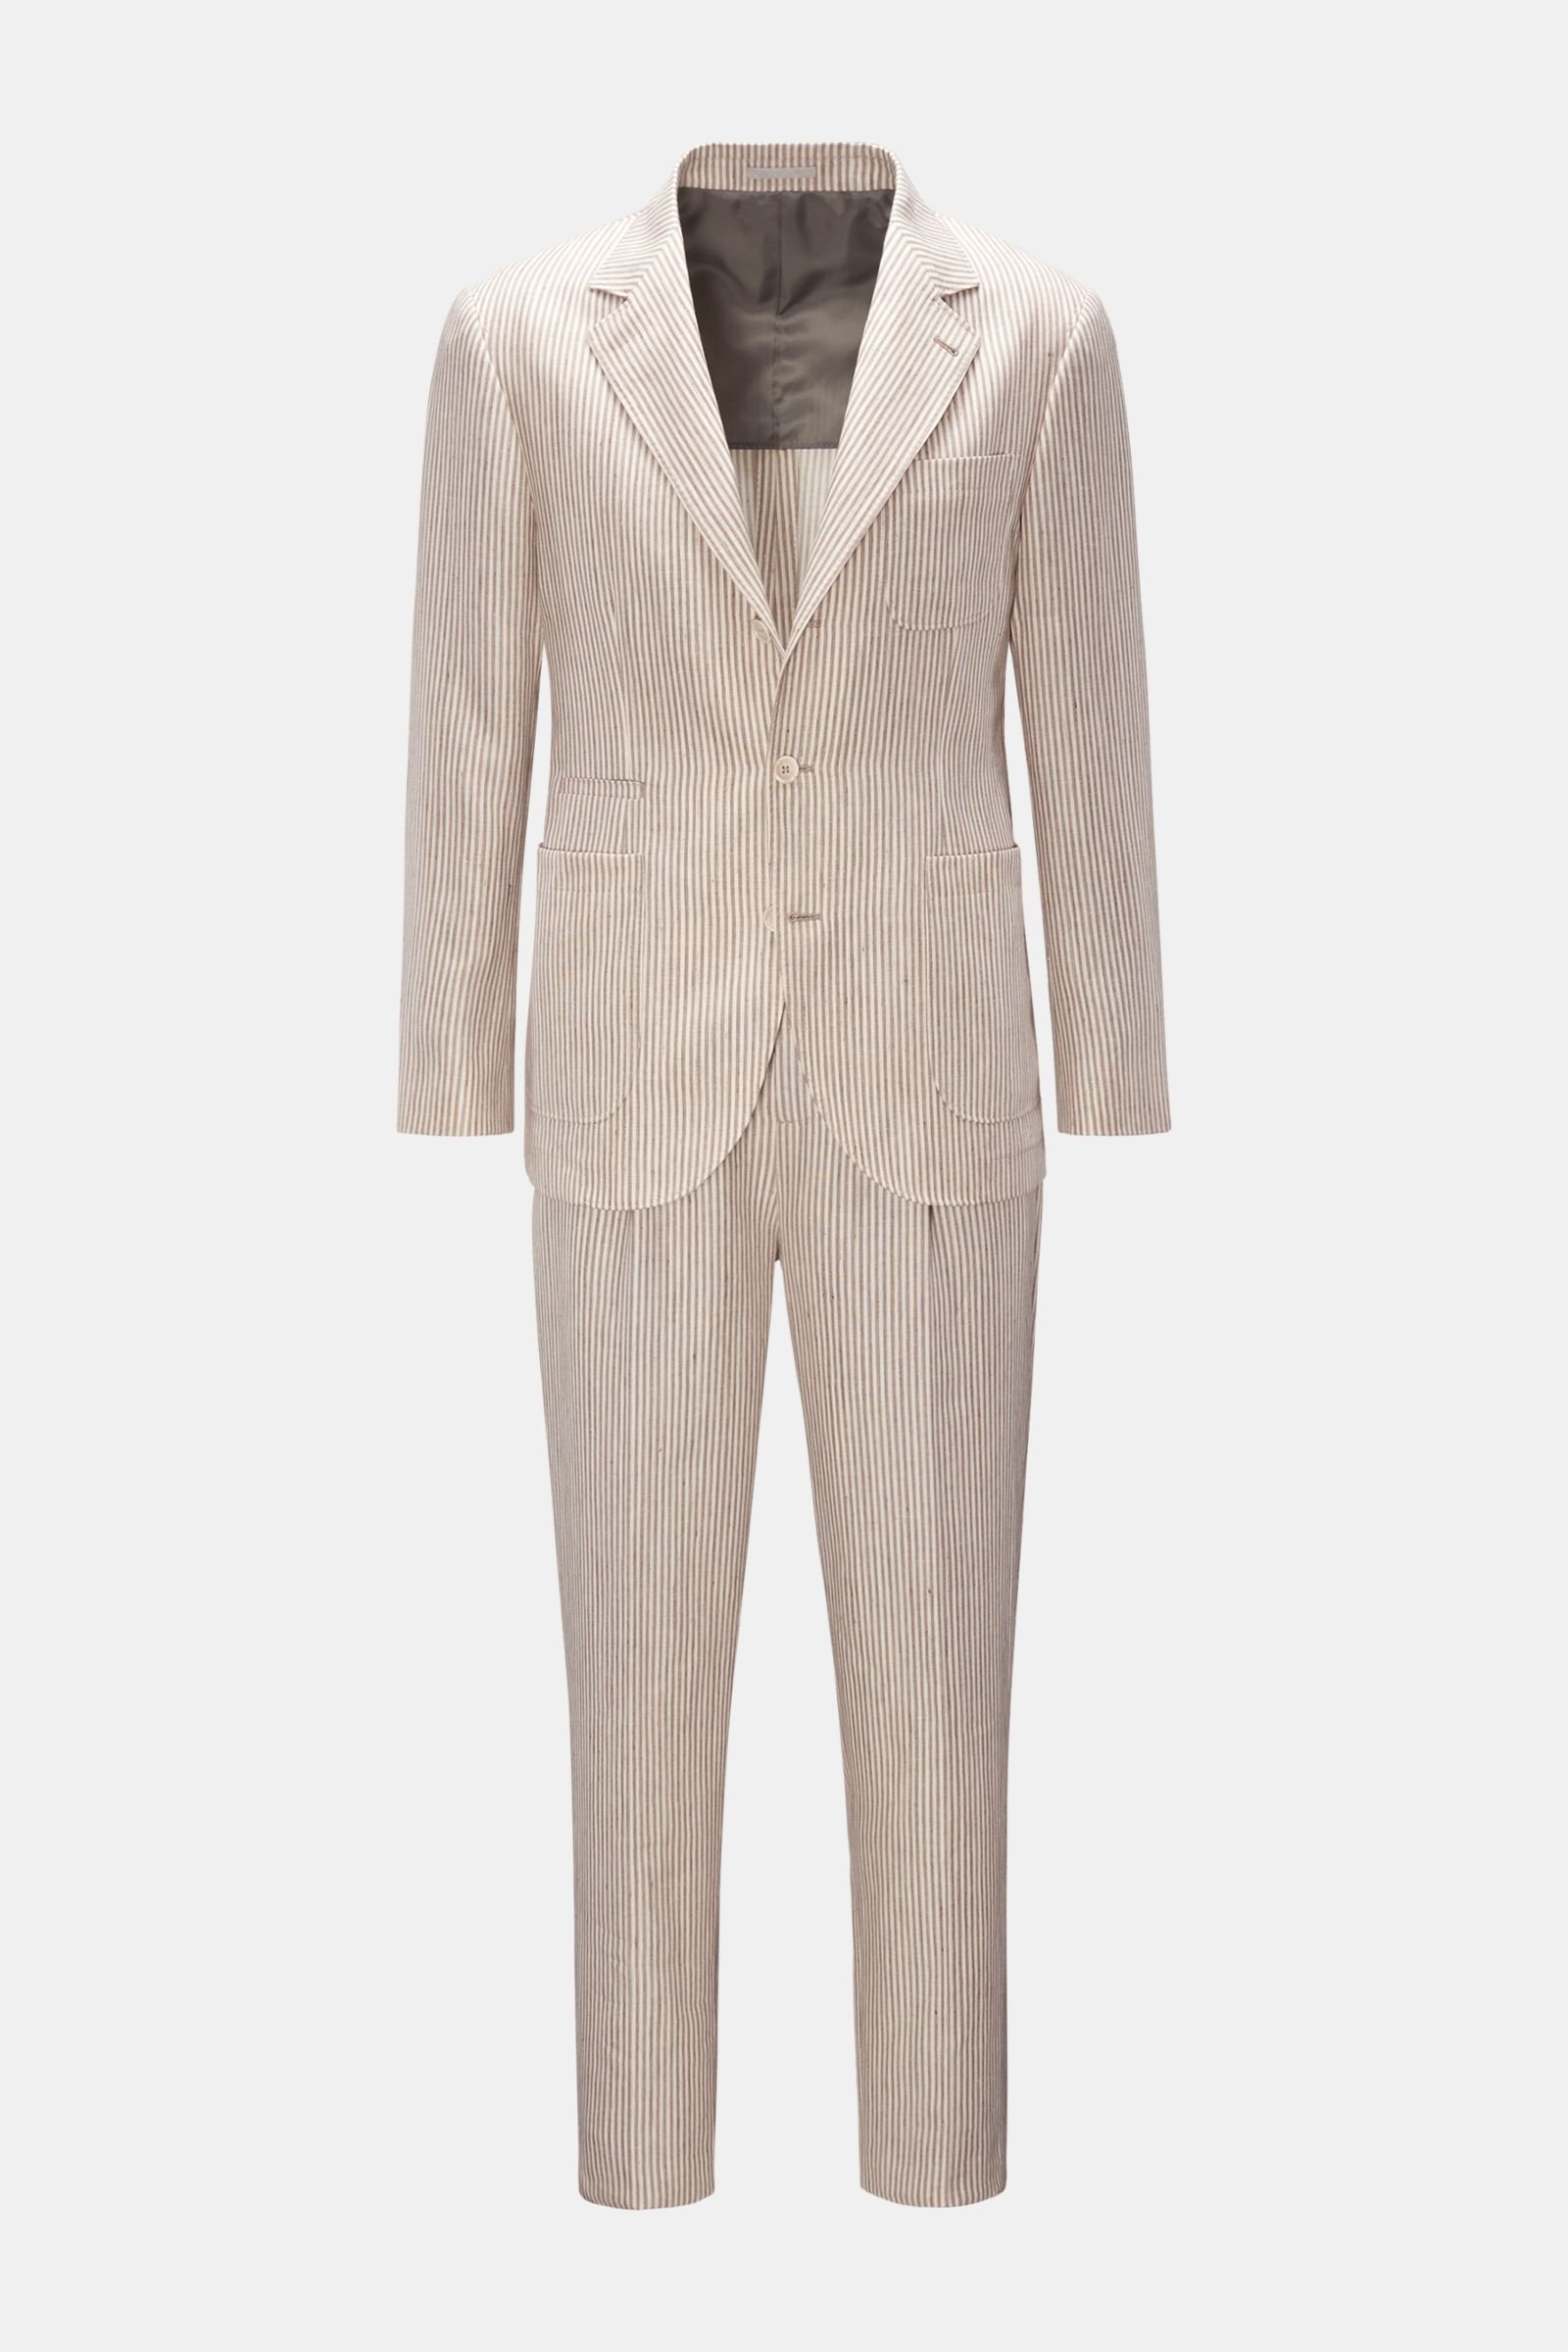 Suit beige/grey-brown striped